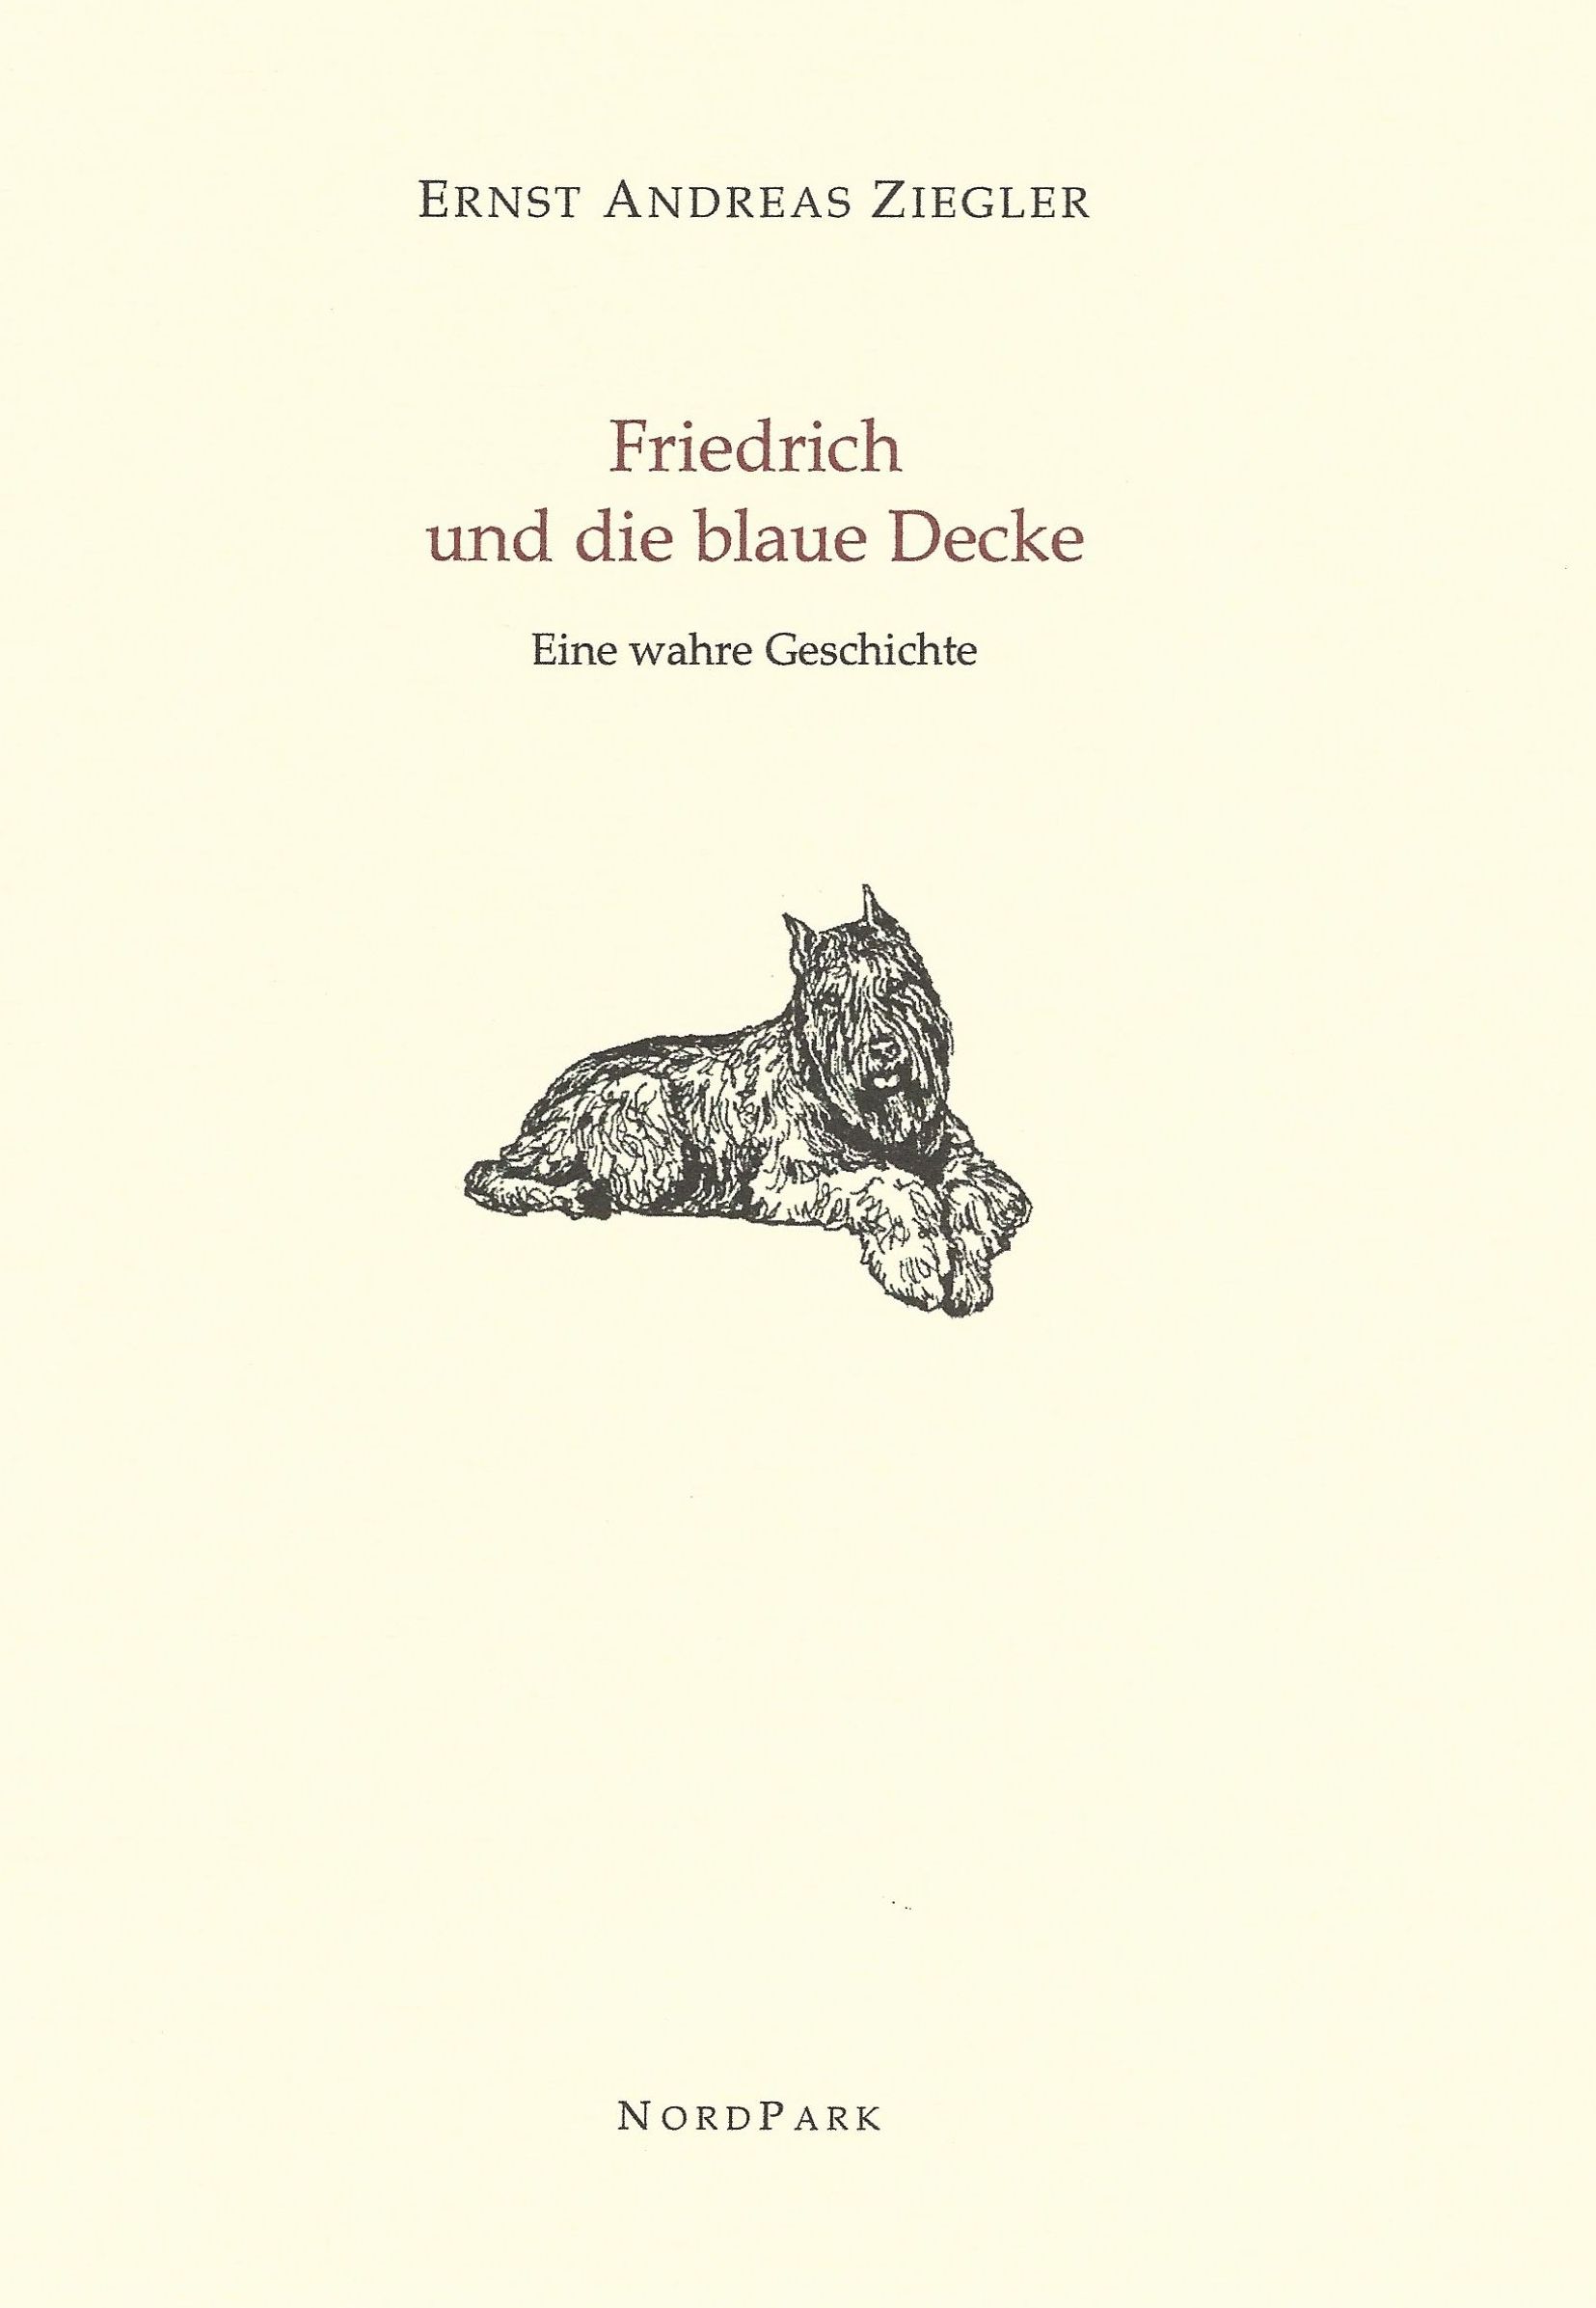 Ziegler-Friedrich-cover.jpg